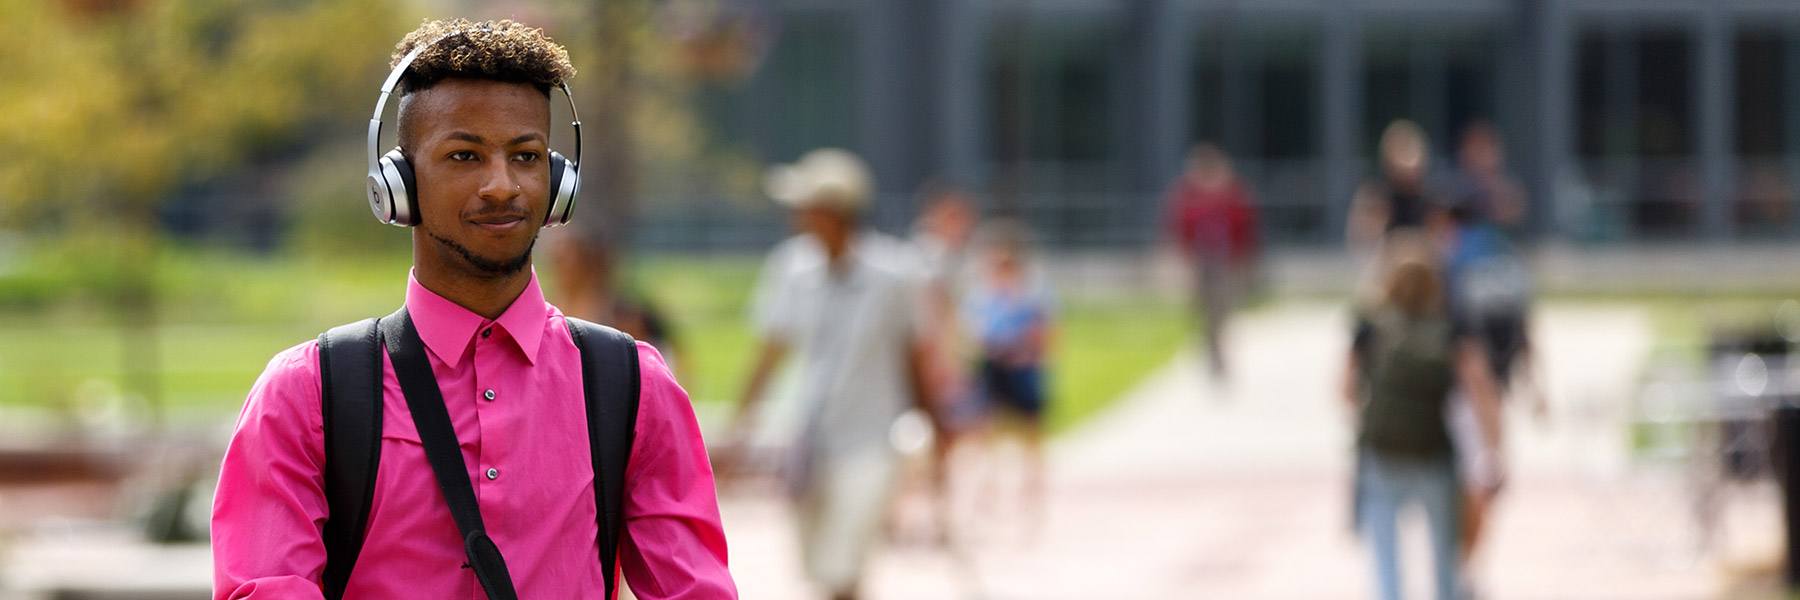 A student wearing headphones walks across campus.